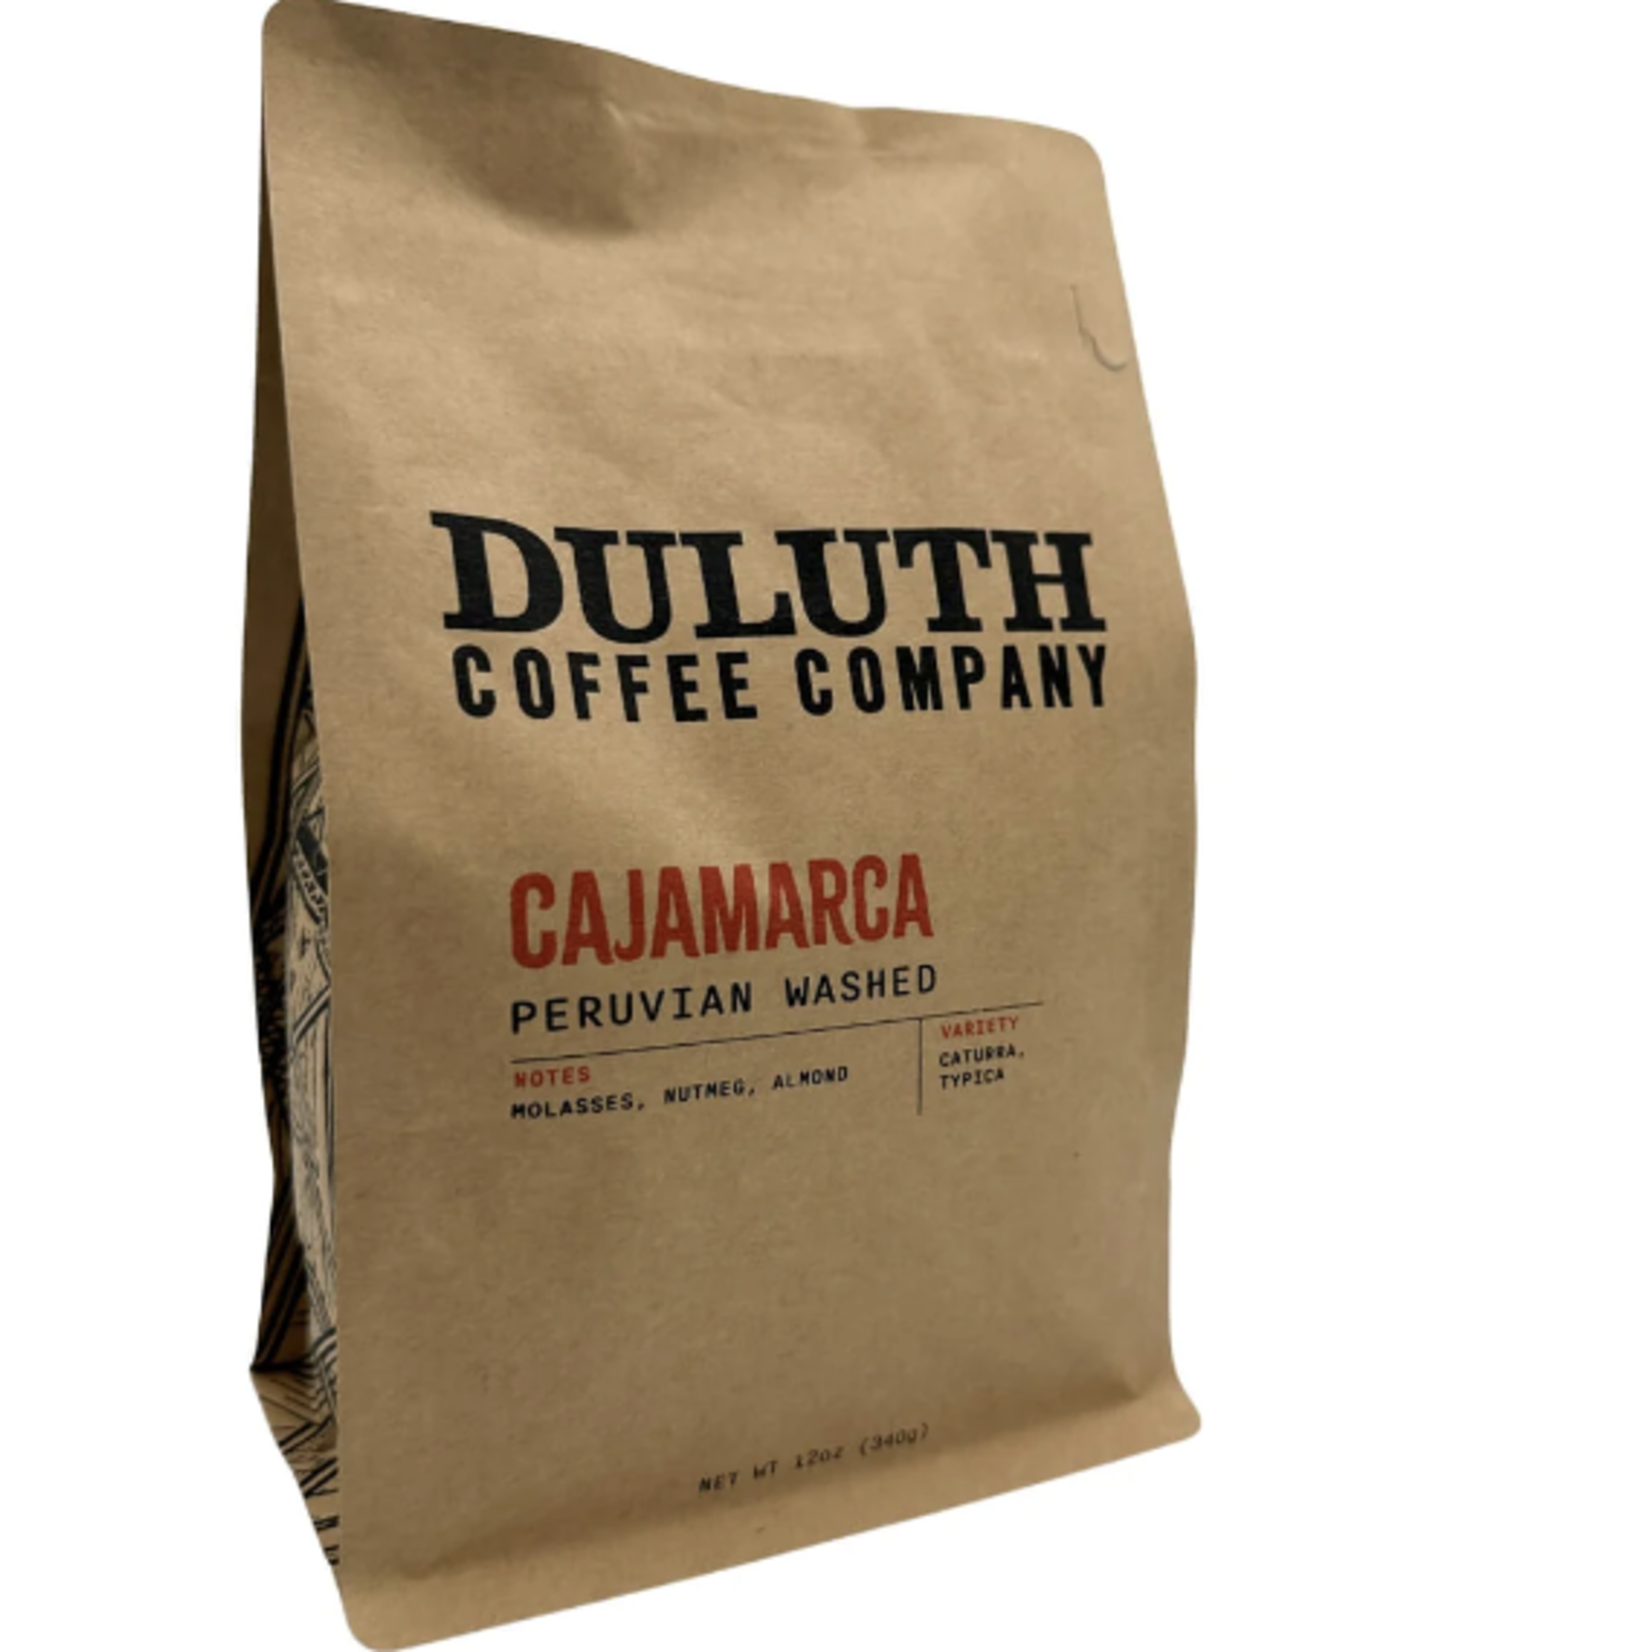 Duluth Coffee Company Peru, Cajamarca, 12oz Whole Bean